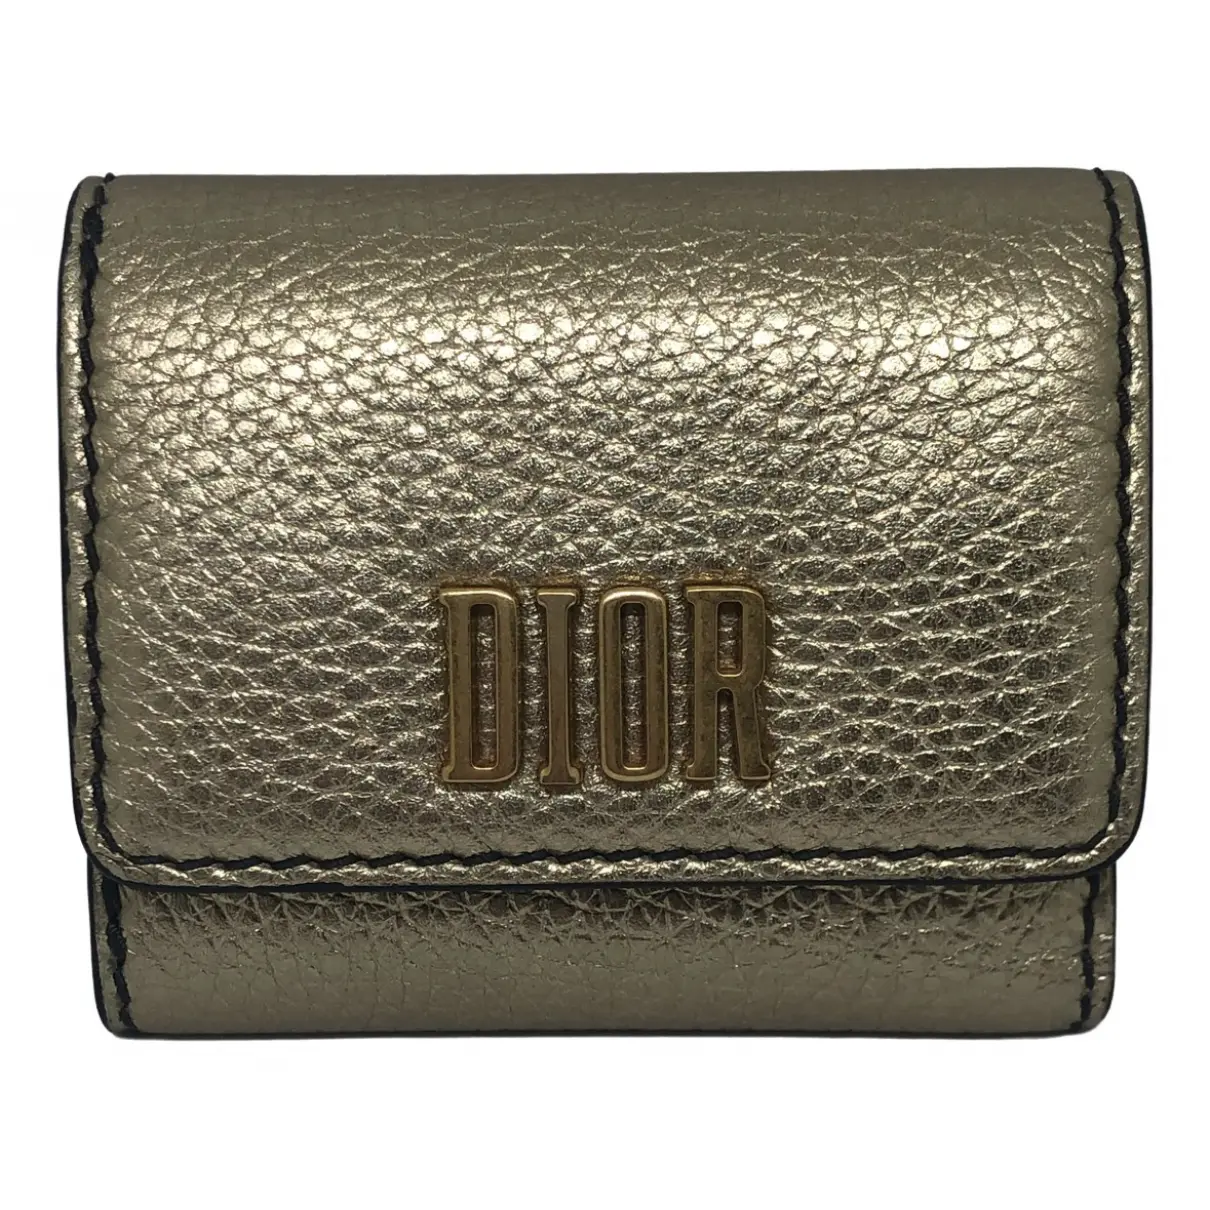 DiorAddict leather wallet Dior